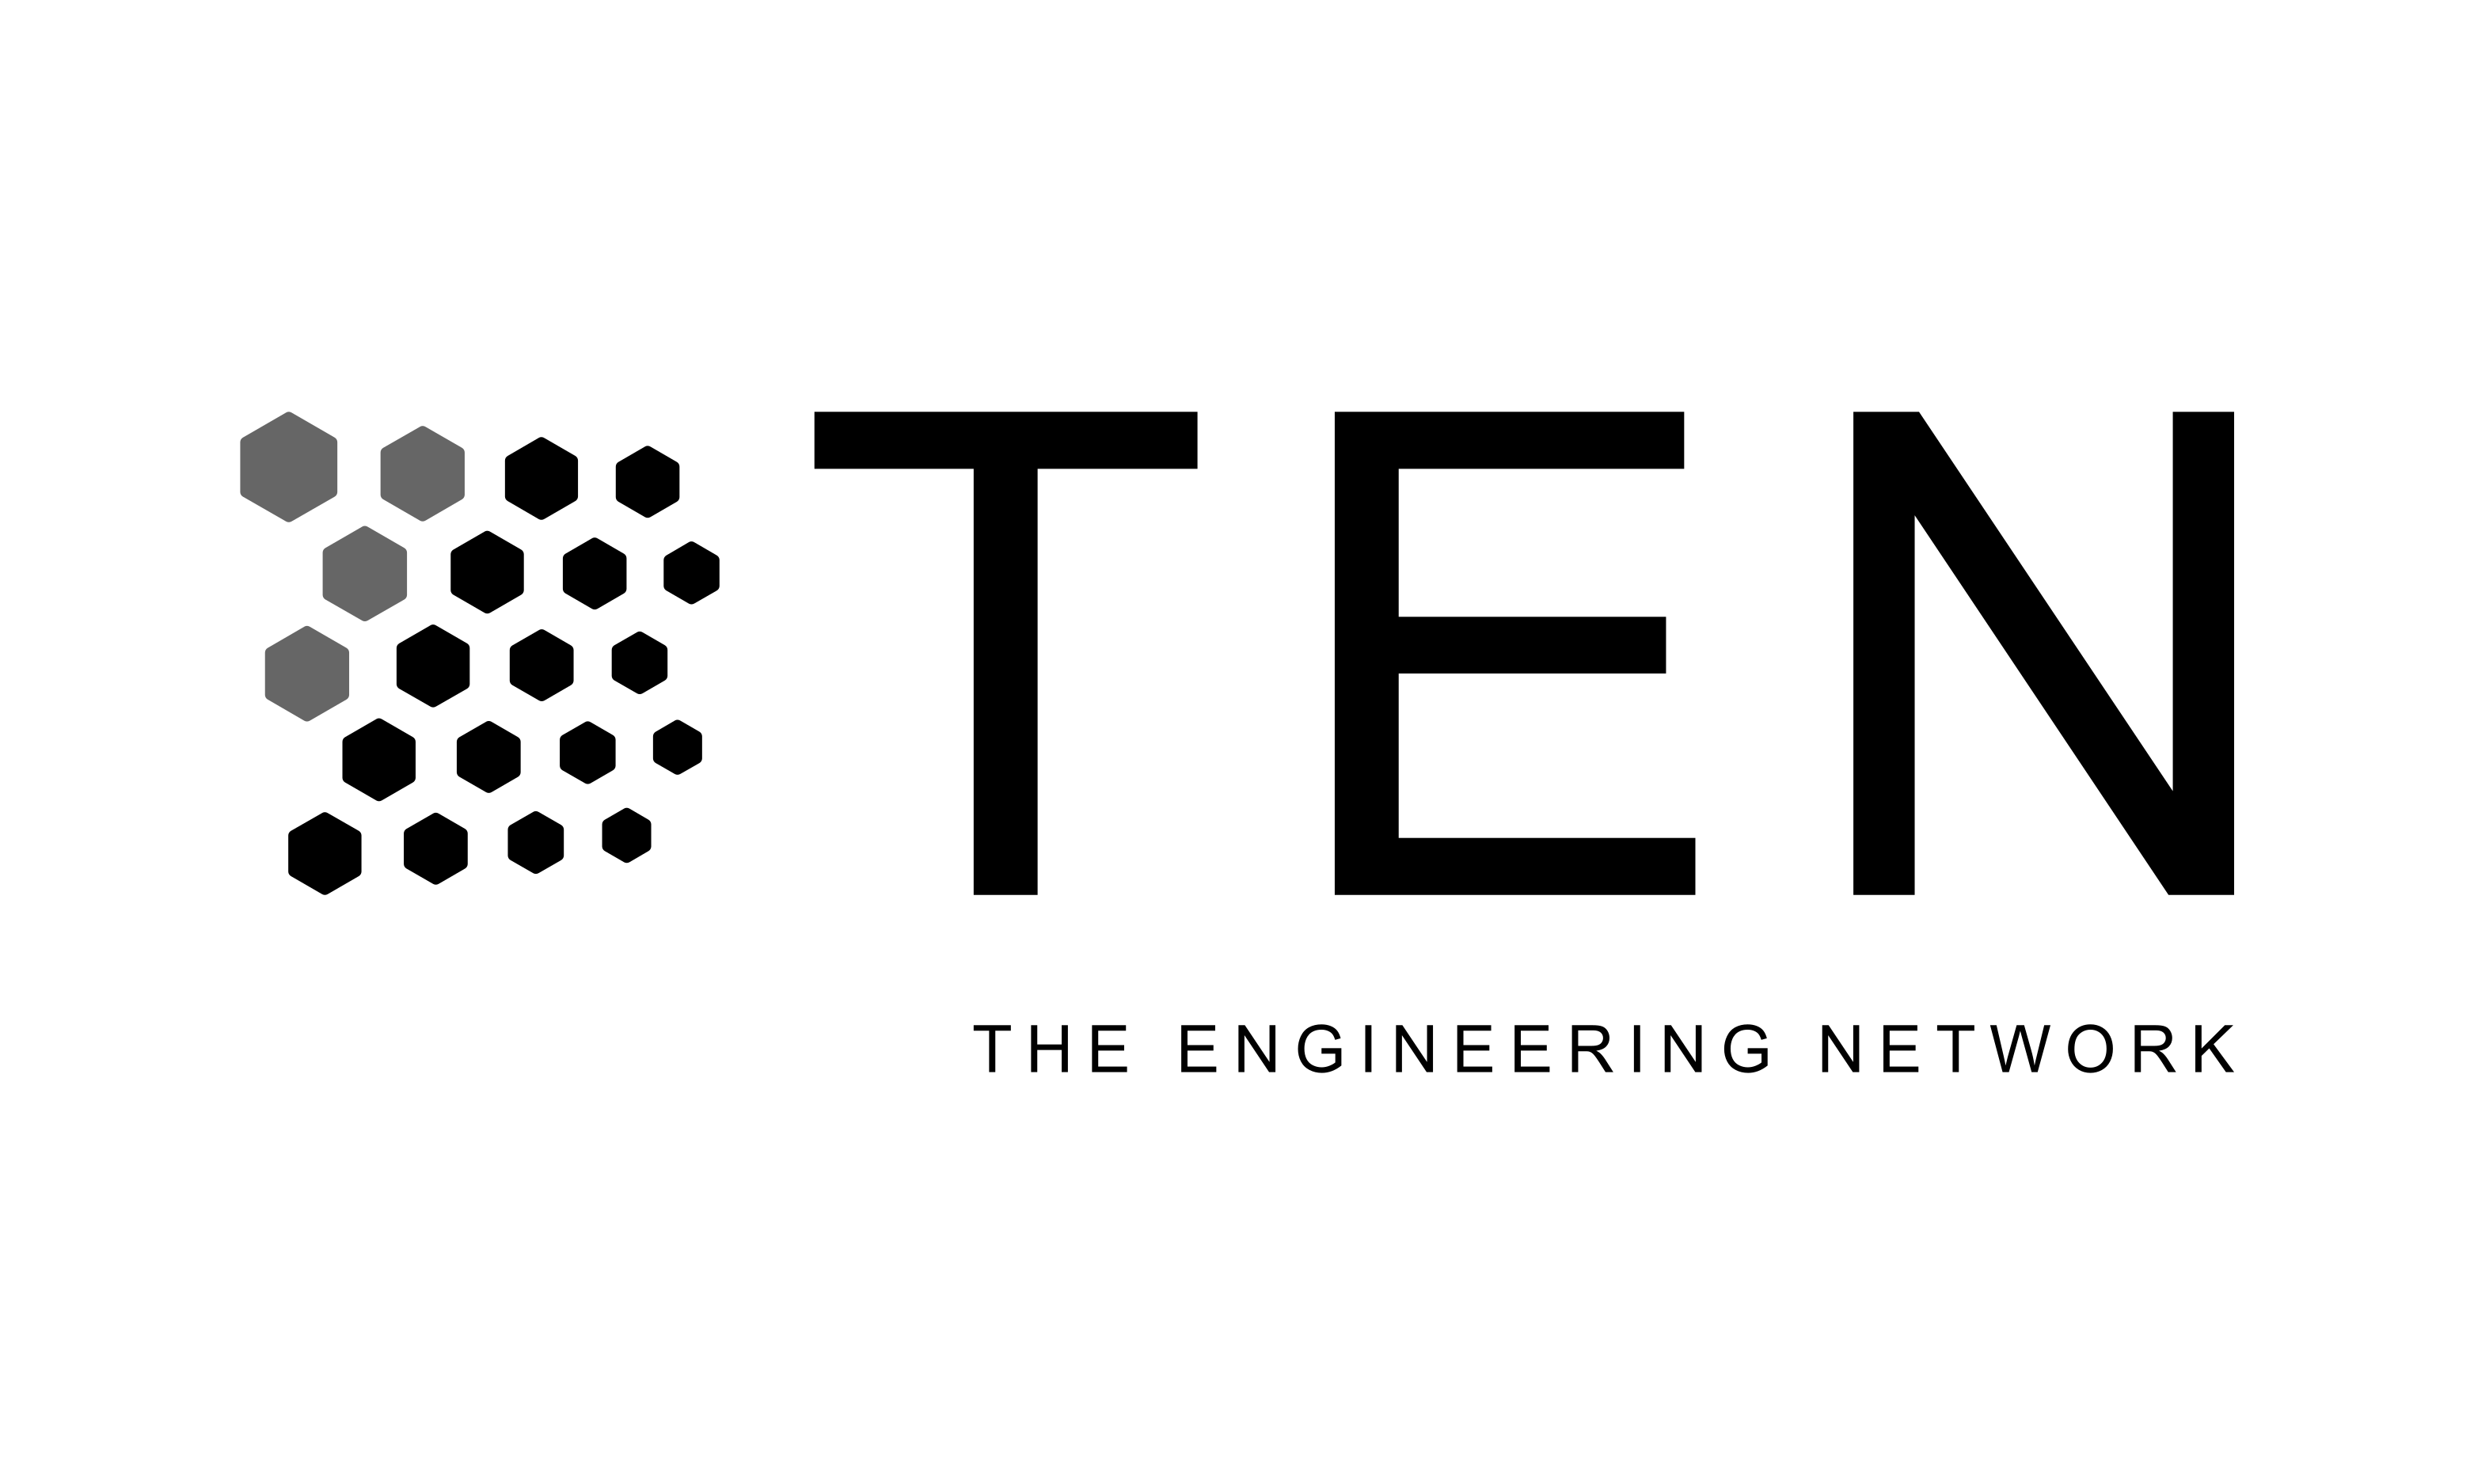 The Engineering Network Ltd